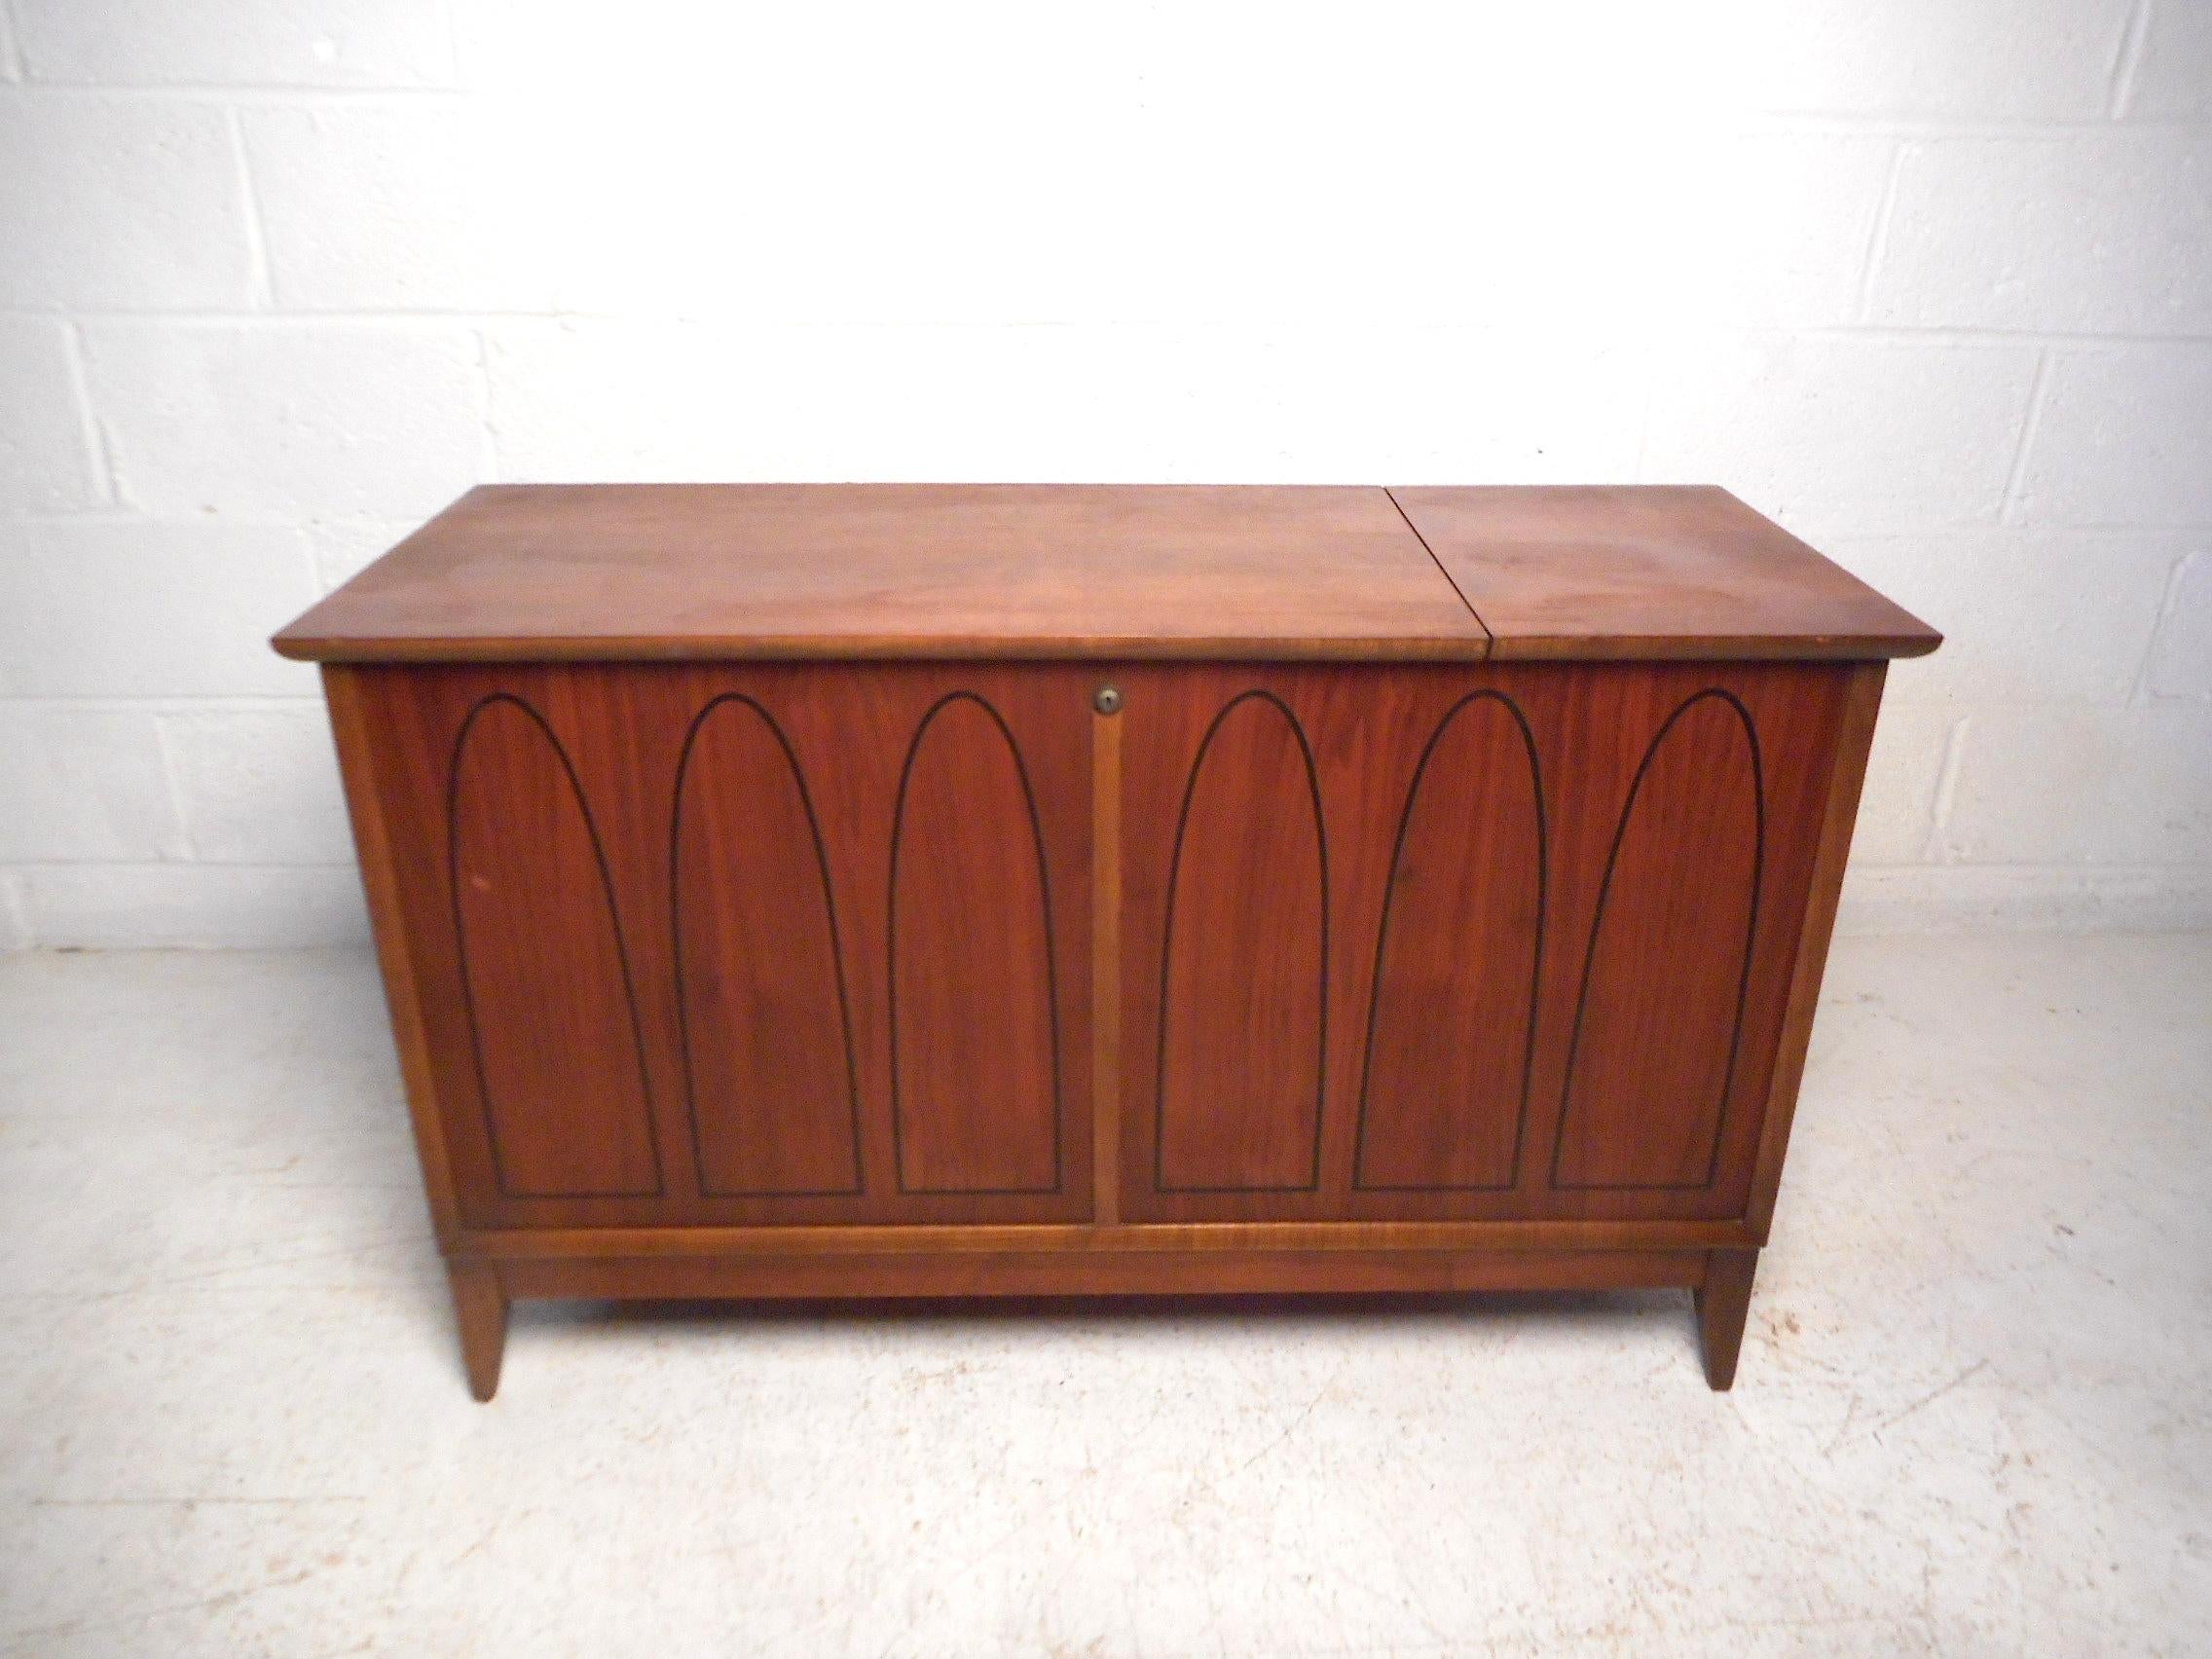 Vintage modern cedar chest by Lane. Sturdy construction, walnut exterior with 